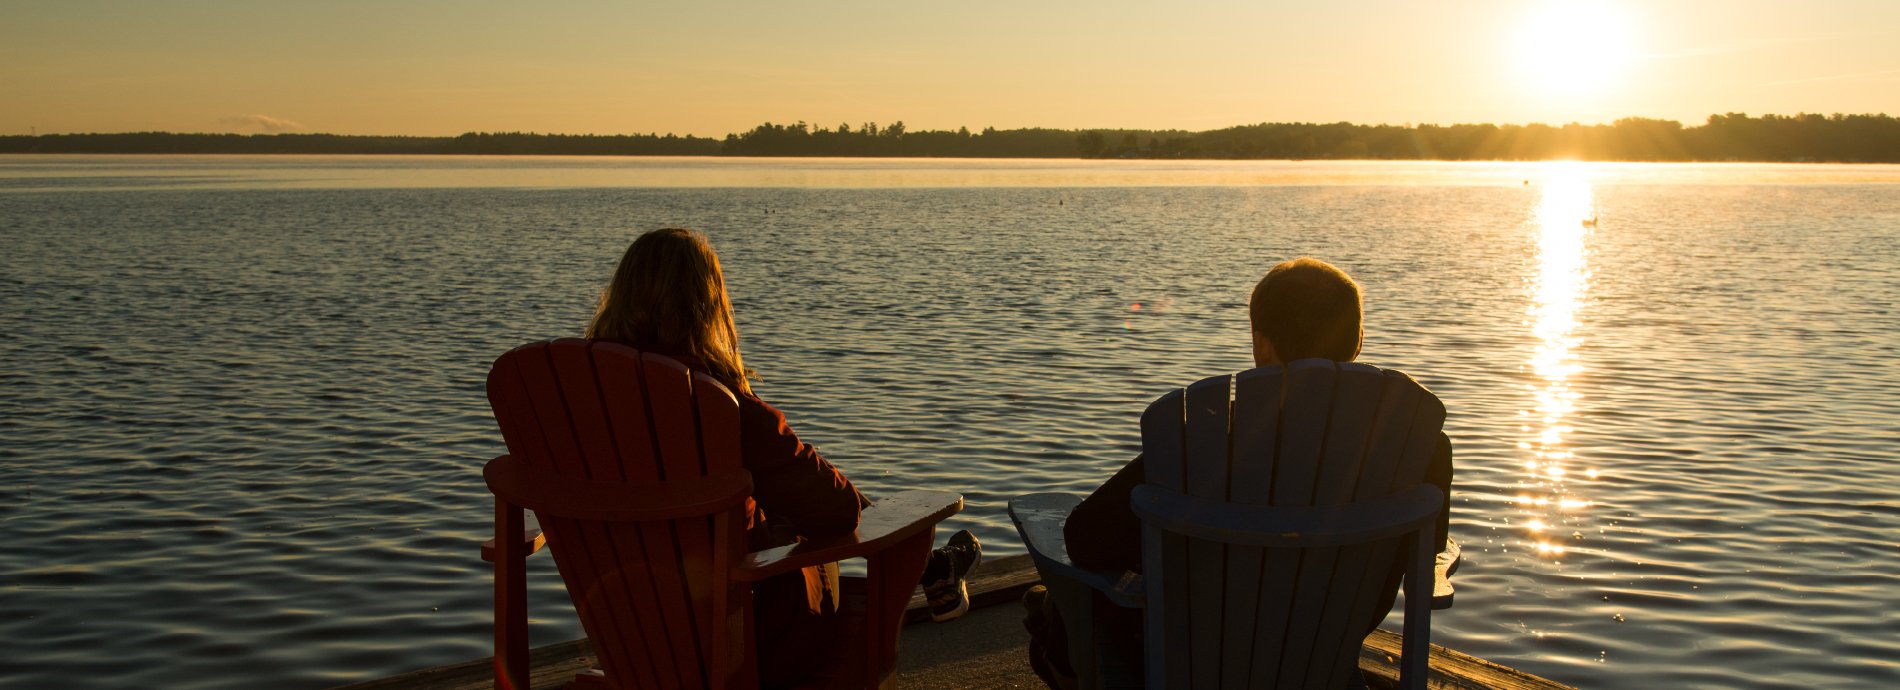 couple in dock overlooking the water